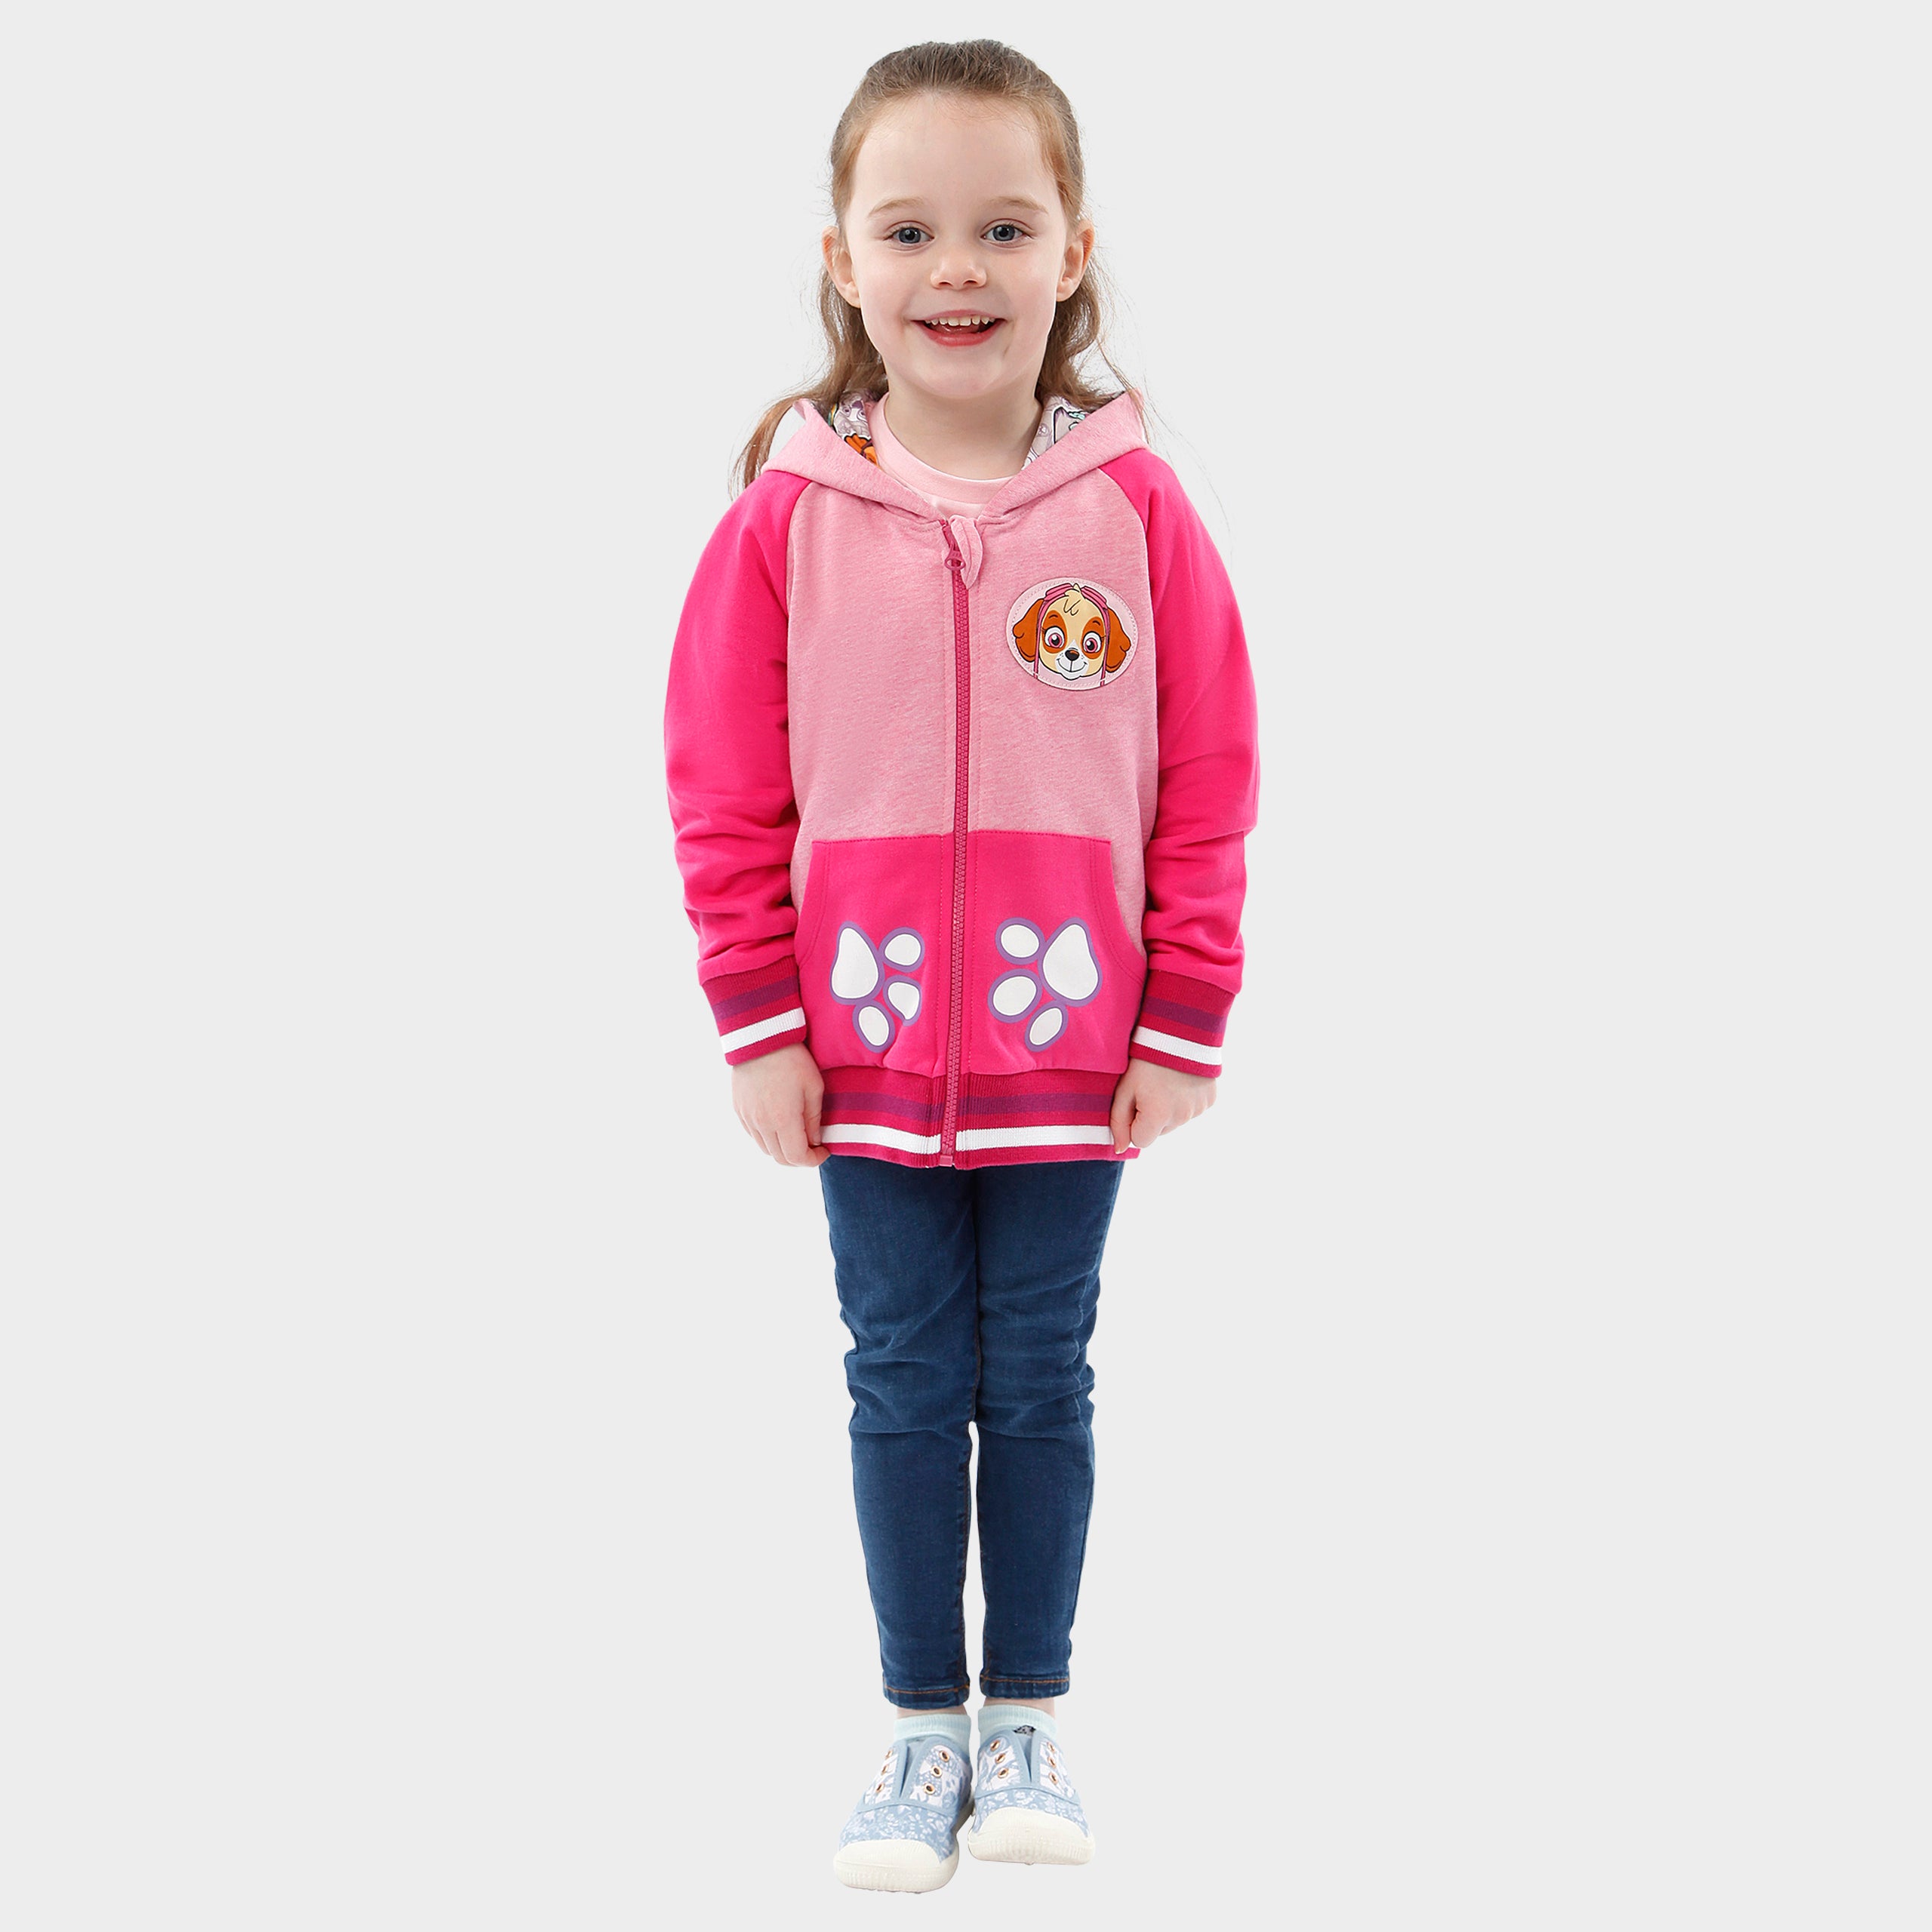 Hoodie Paw Merchandise Girls Official Buy | Kids Character.com Patrol |